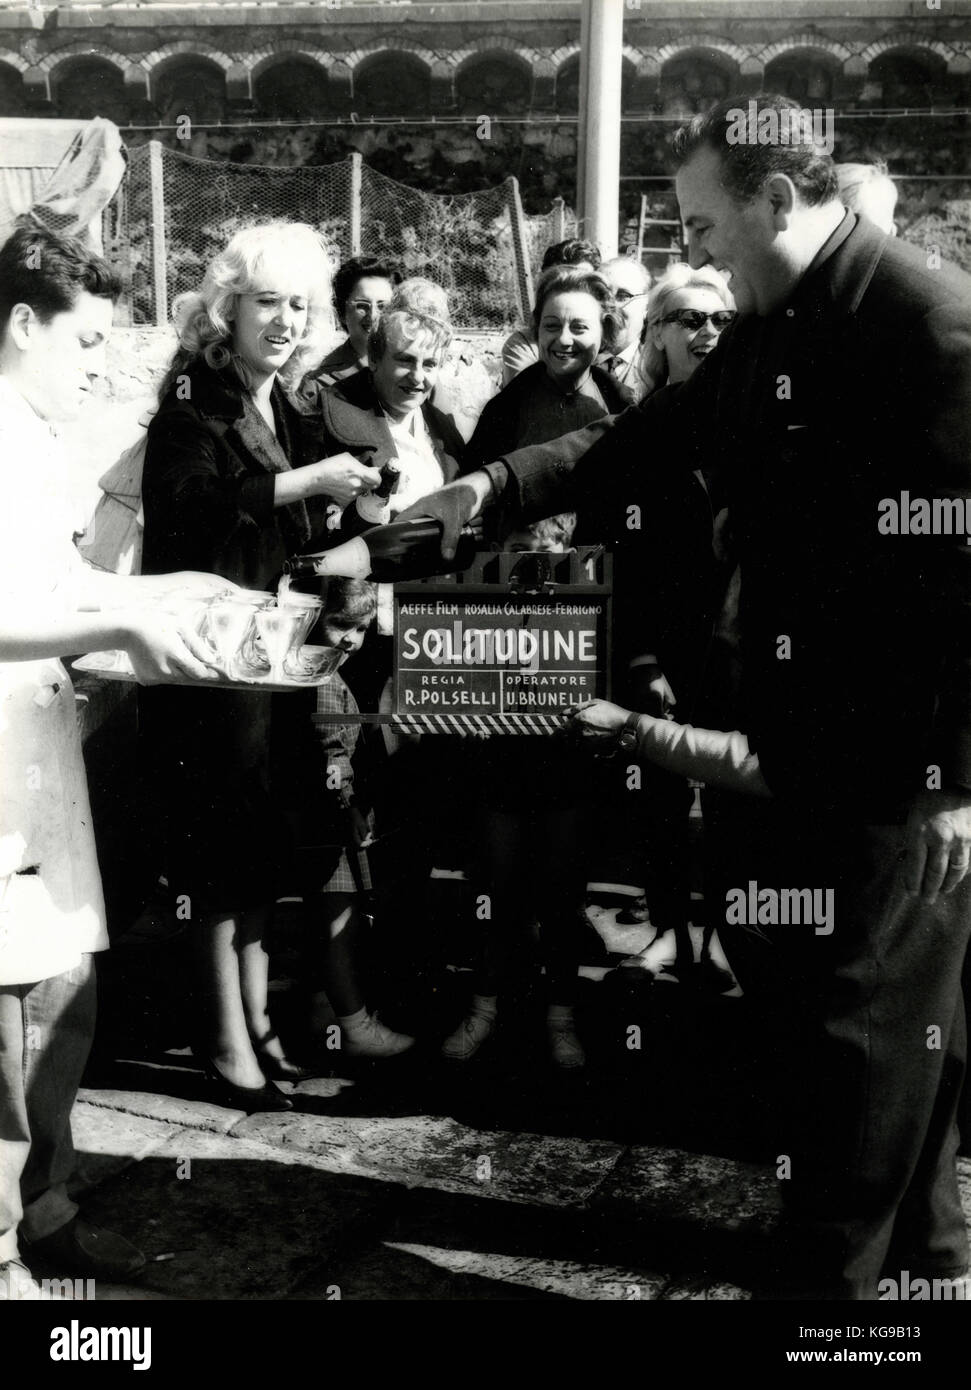 El director de cine Renato Polselli durante el rodaje Solitudine tostado, 1961 Italia Foto de stock